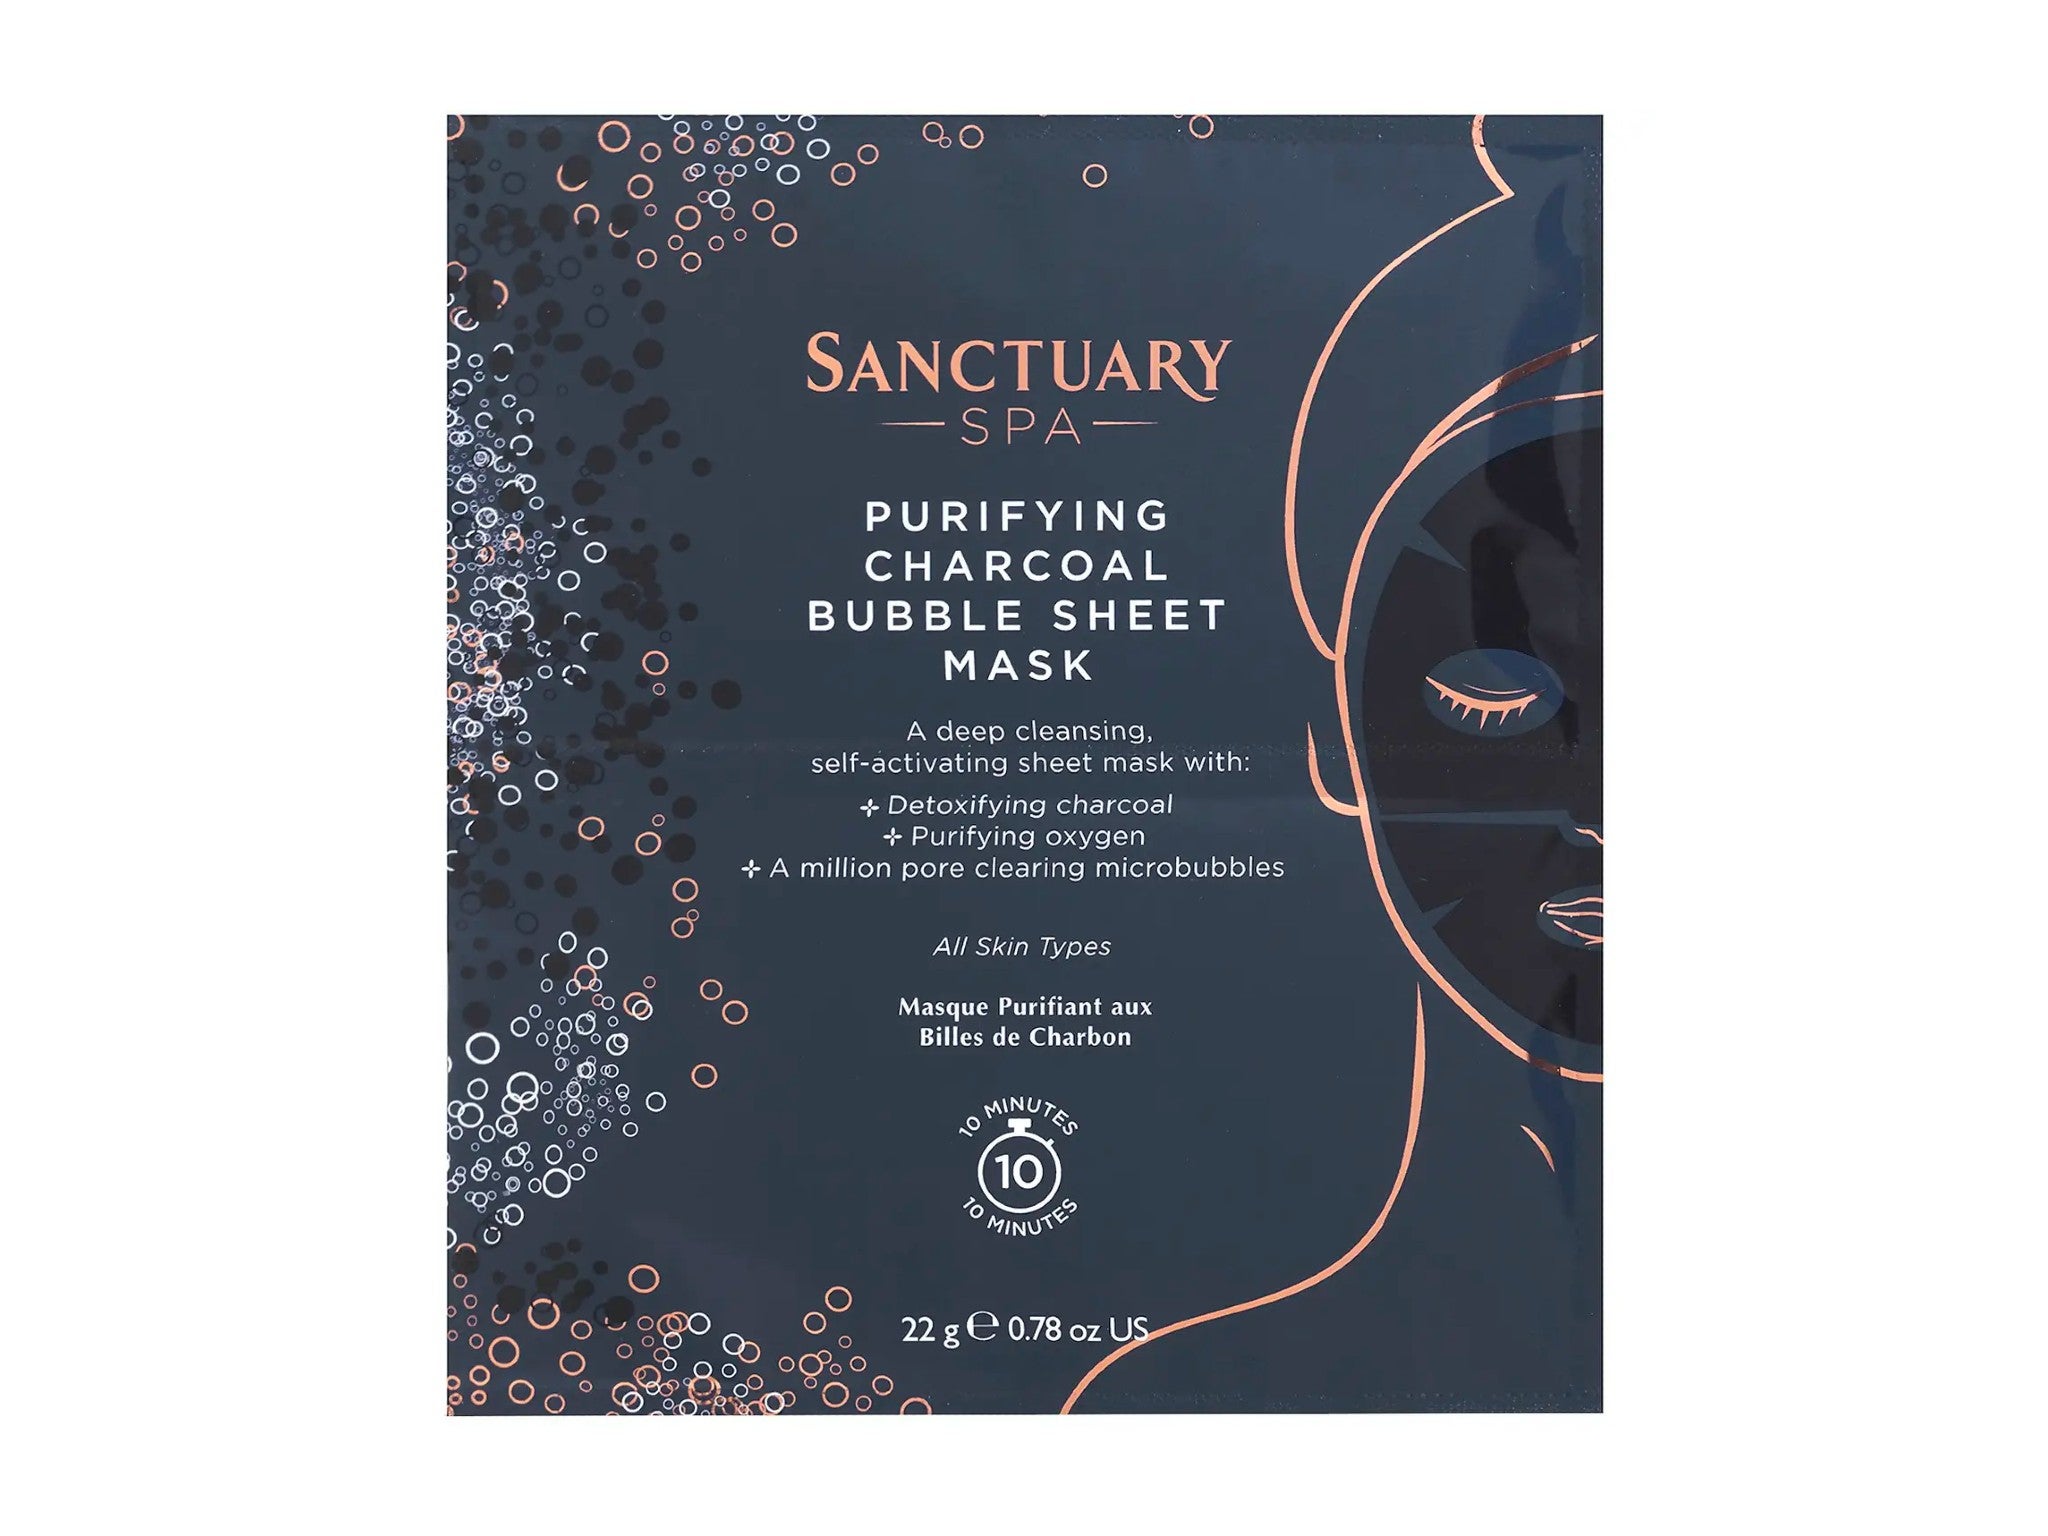 Sanctuary Spa charcoal bubble sheet mask indybest.jpg